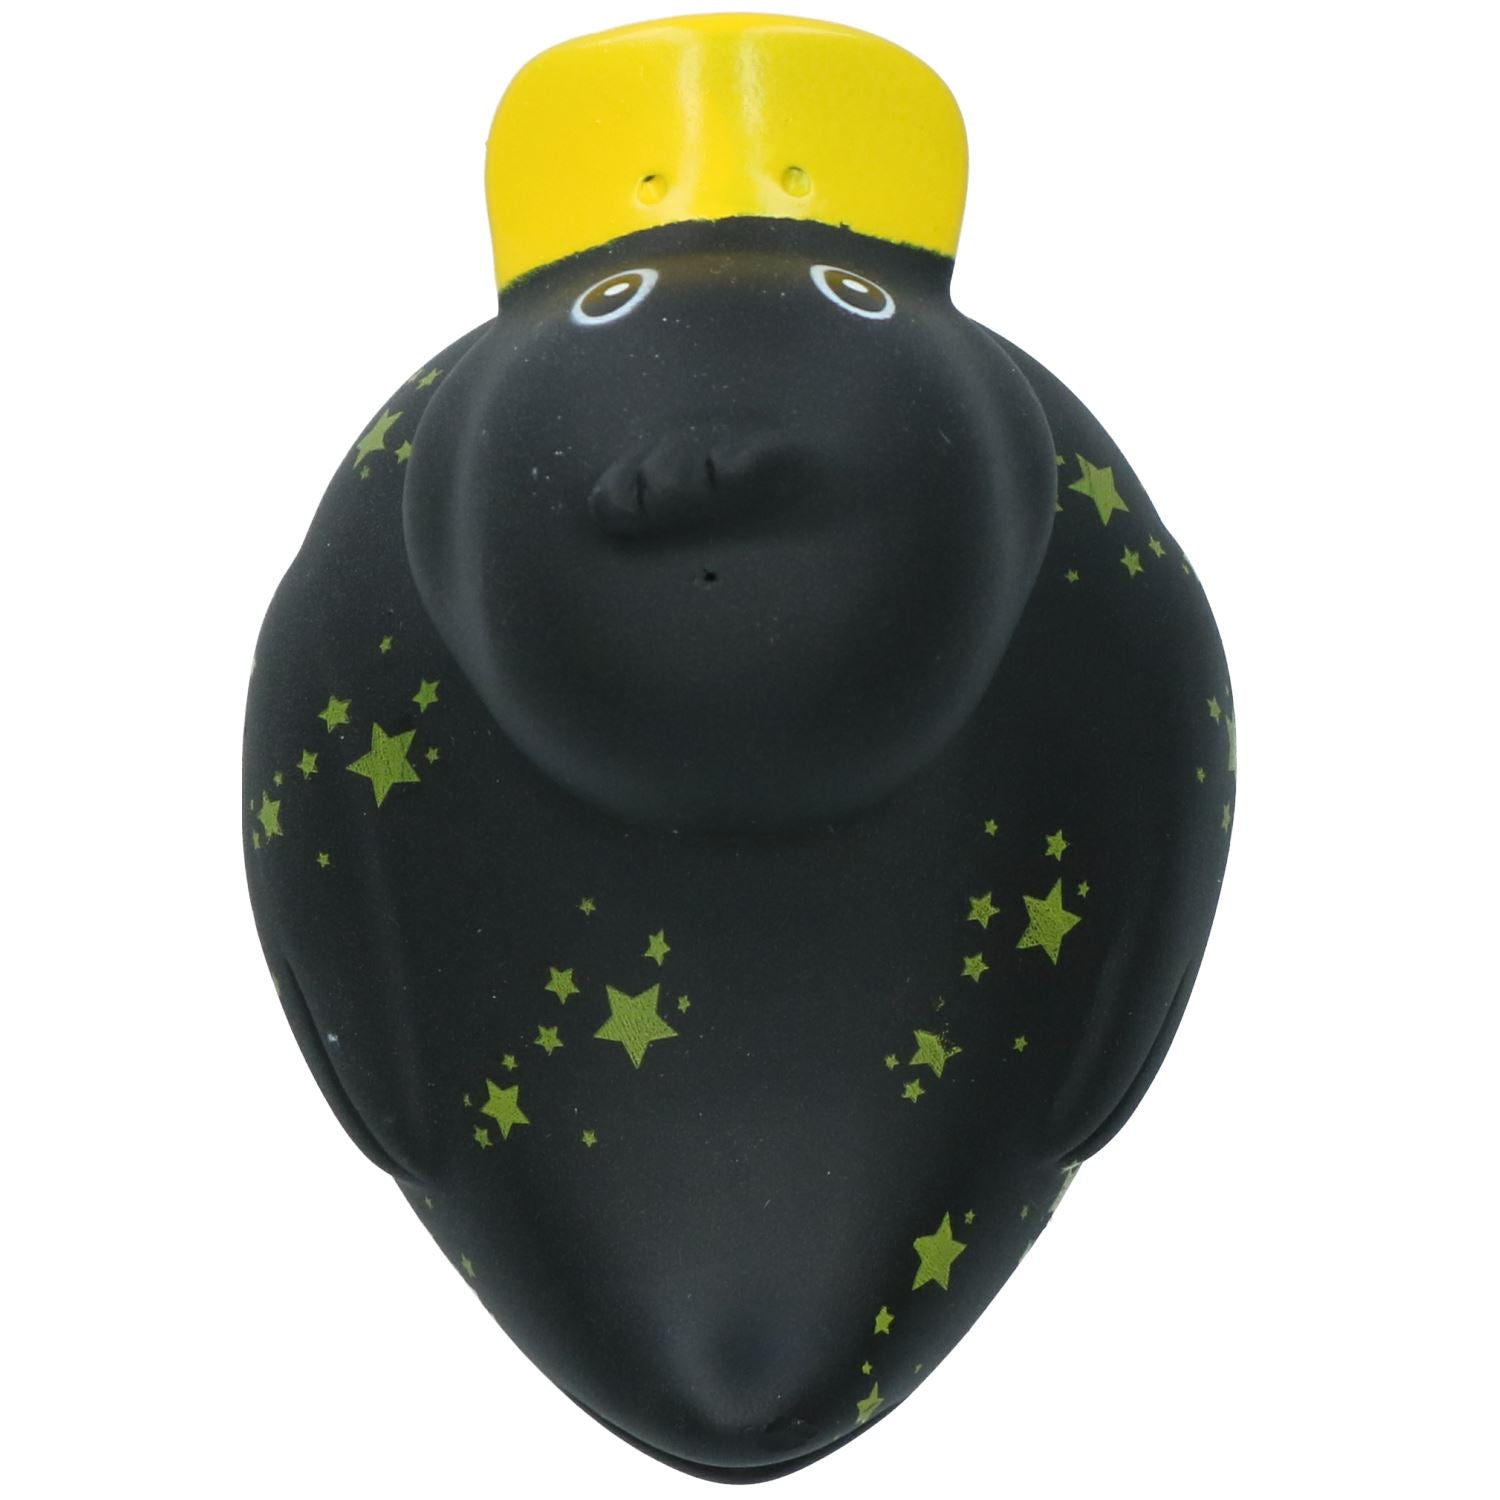 Black Star Rubber Vinyl Squeaky Duck Dog Toy With Internal Squeak 8x10cm